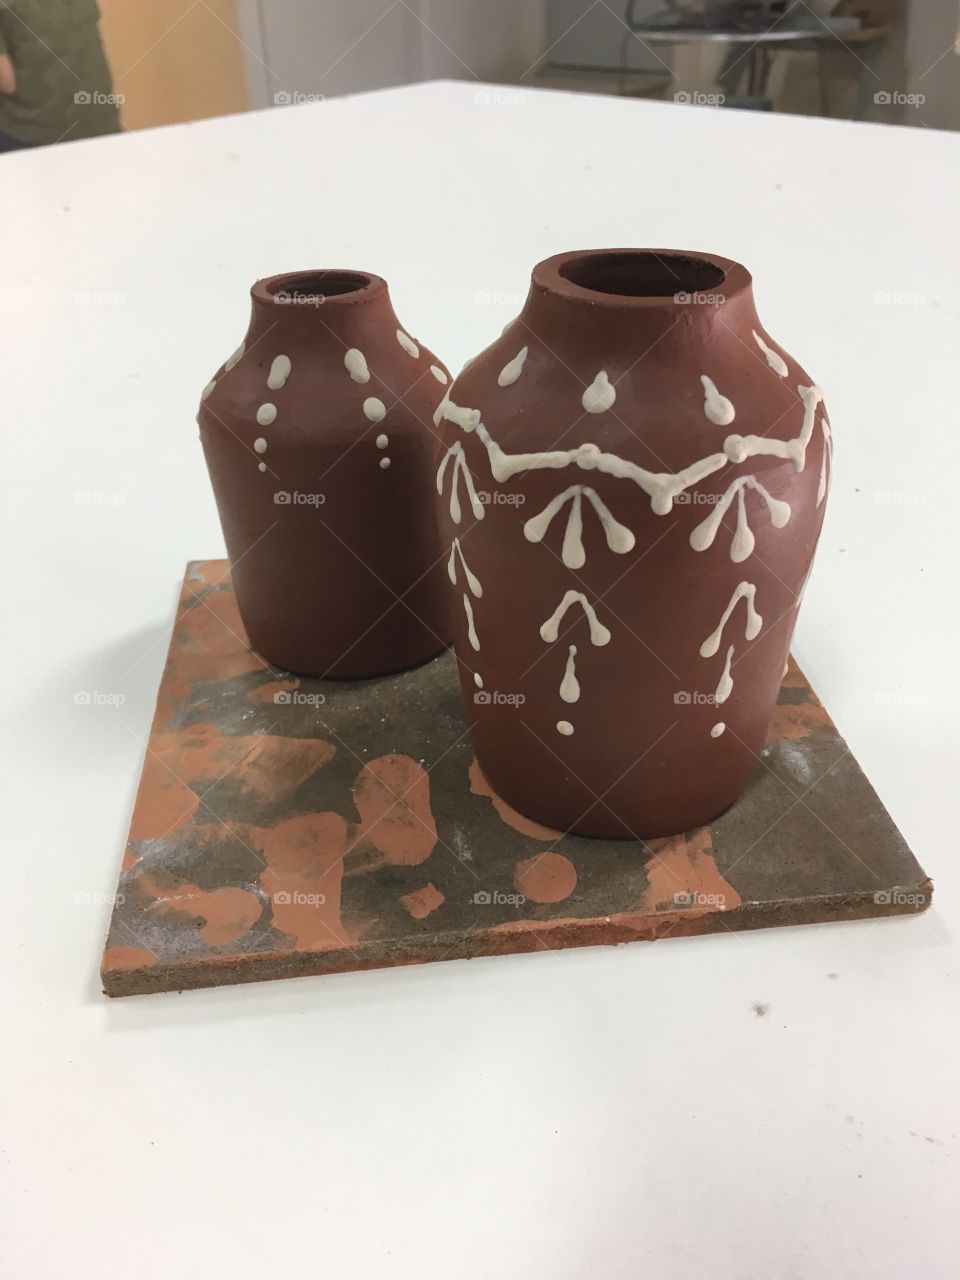 Slip trailing on stoneware handmade pottery 